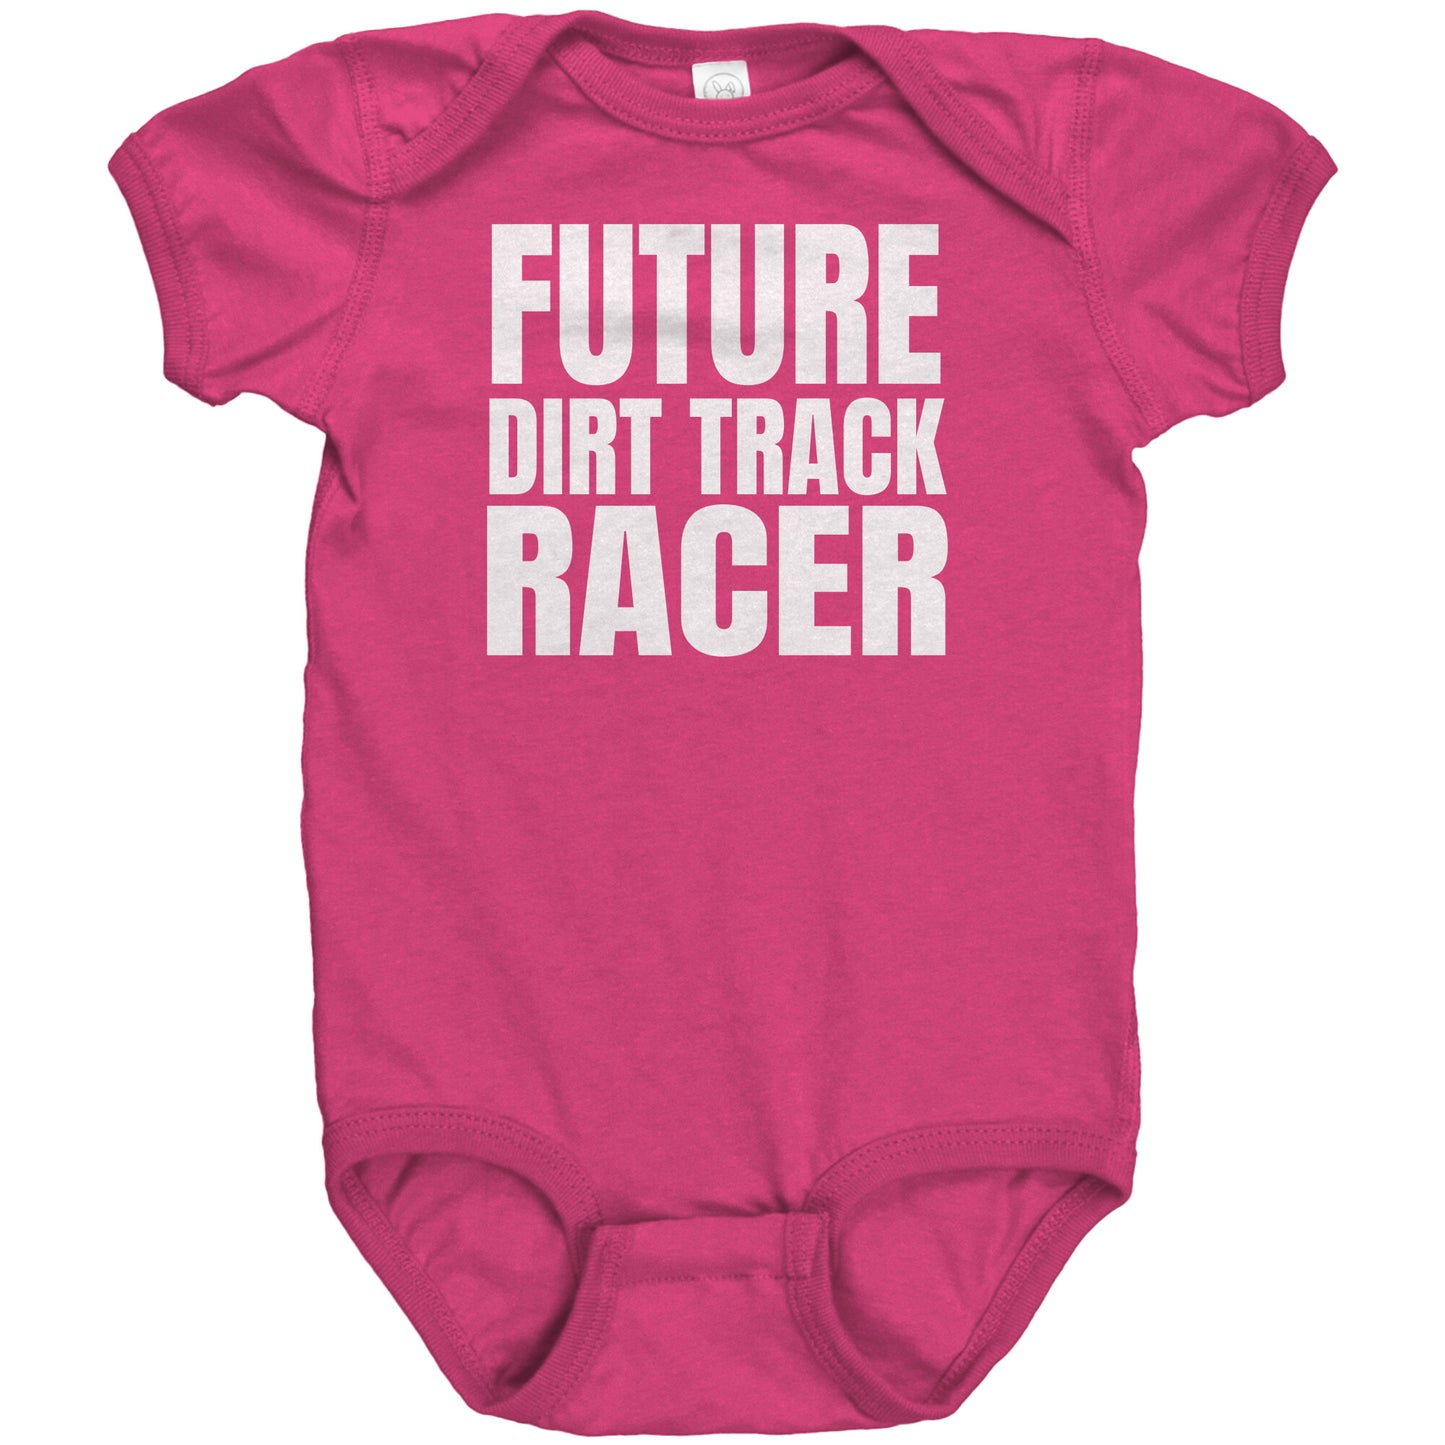 FUTURE DIRT TRACK RACER INFANT BODYSUIT